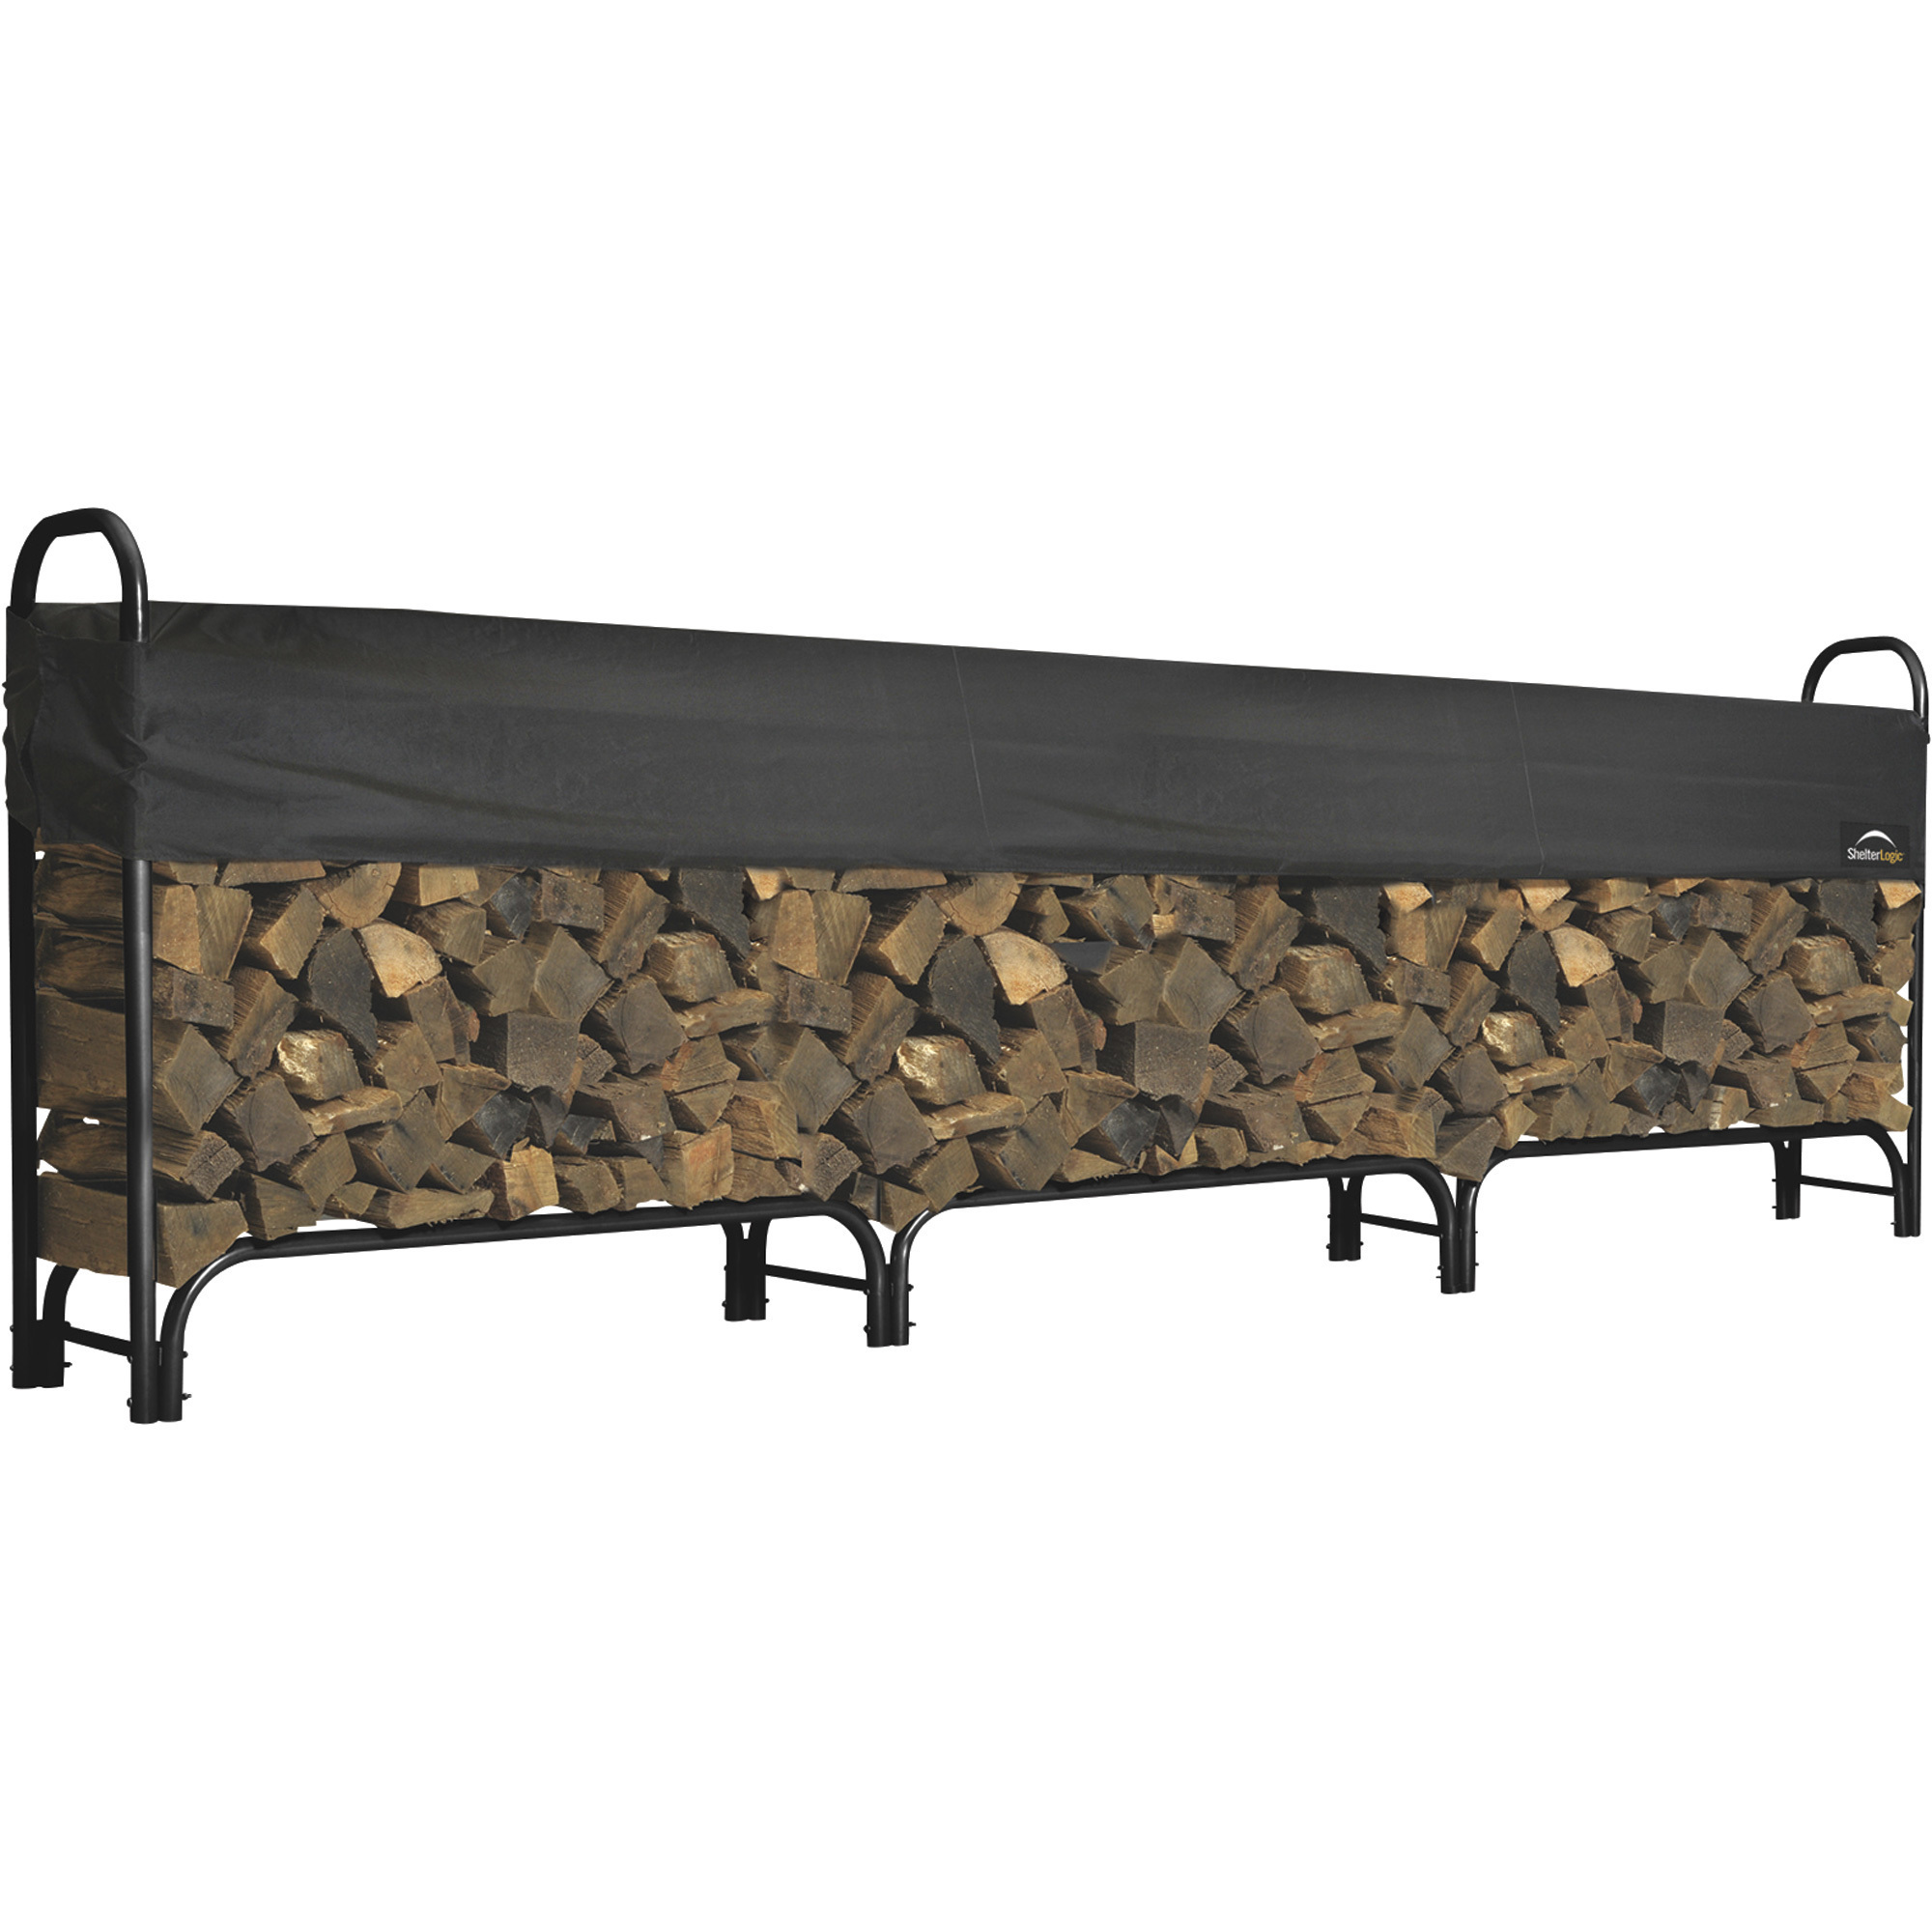 ShelterLogic Covered Firewood Rack, 12ft.L, Model 90403